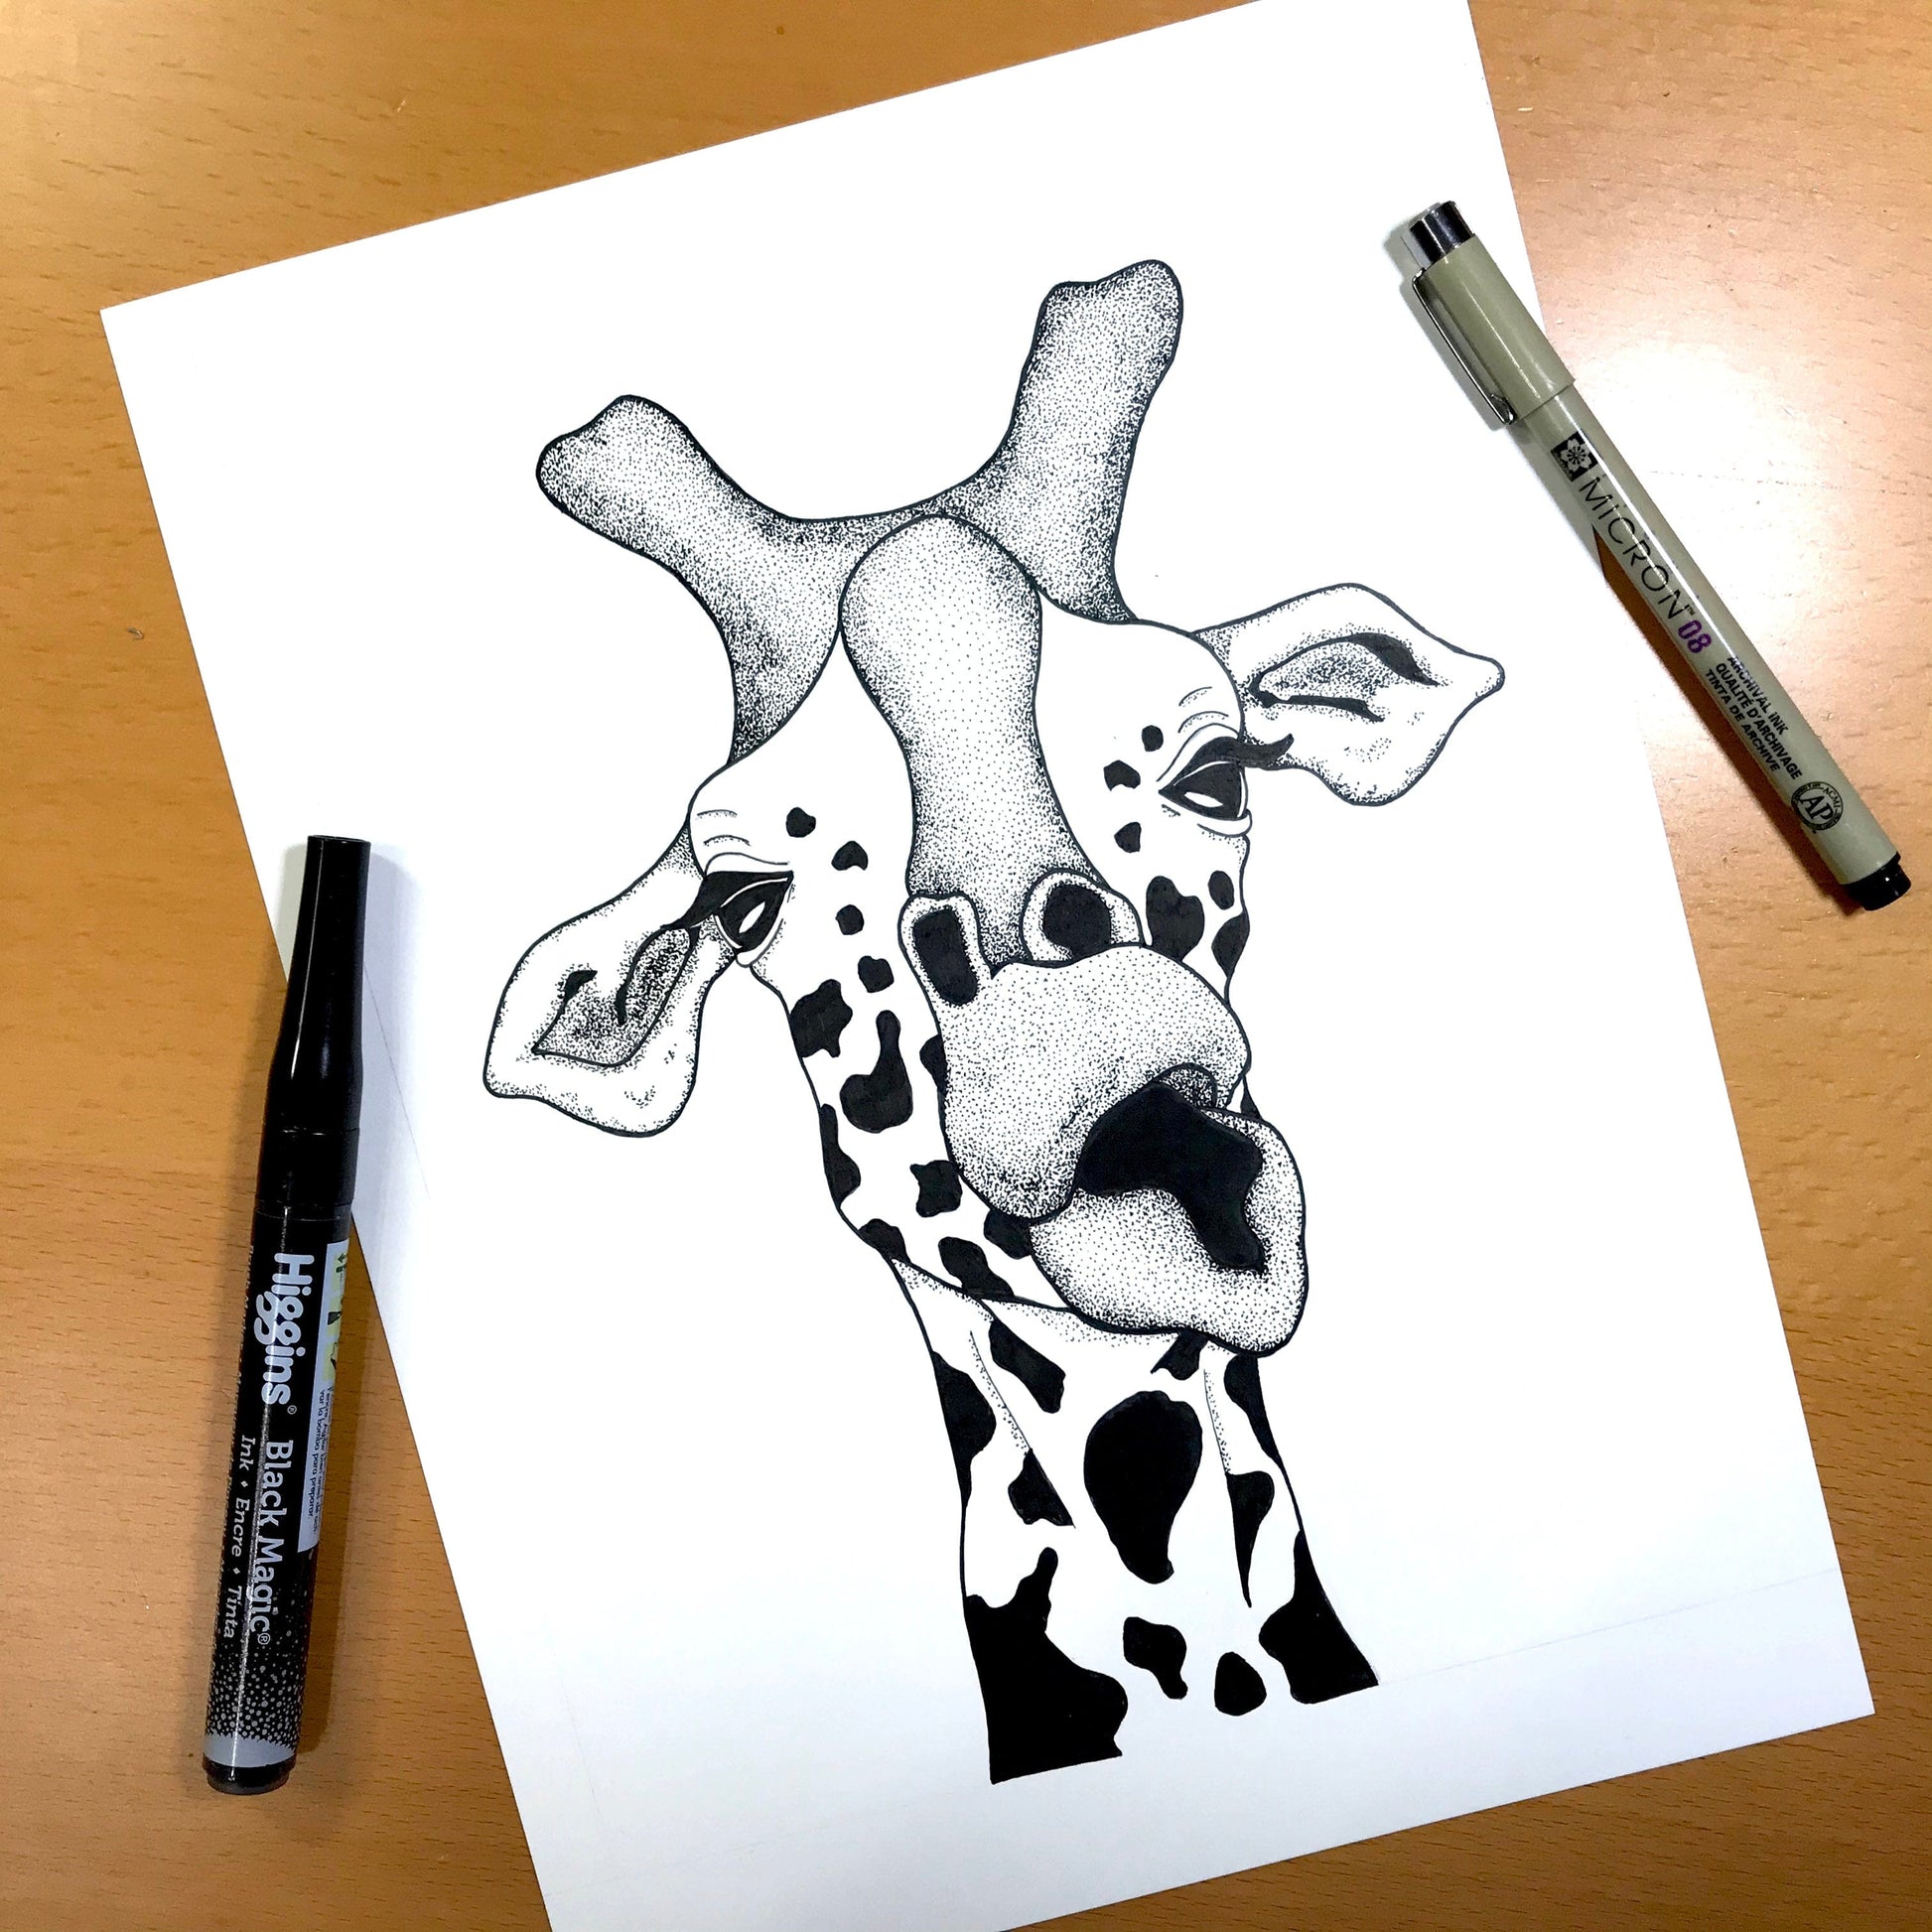 PinkPolish Design Original Art "Dazed" Funny Giraffe Inspired Original Ink Illustration